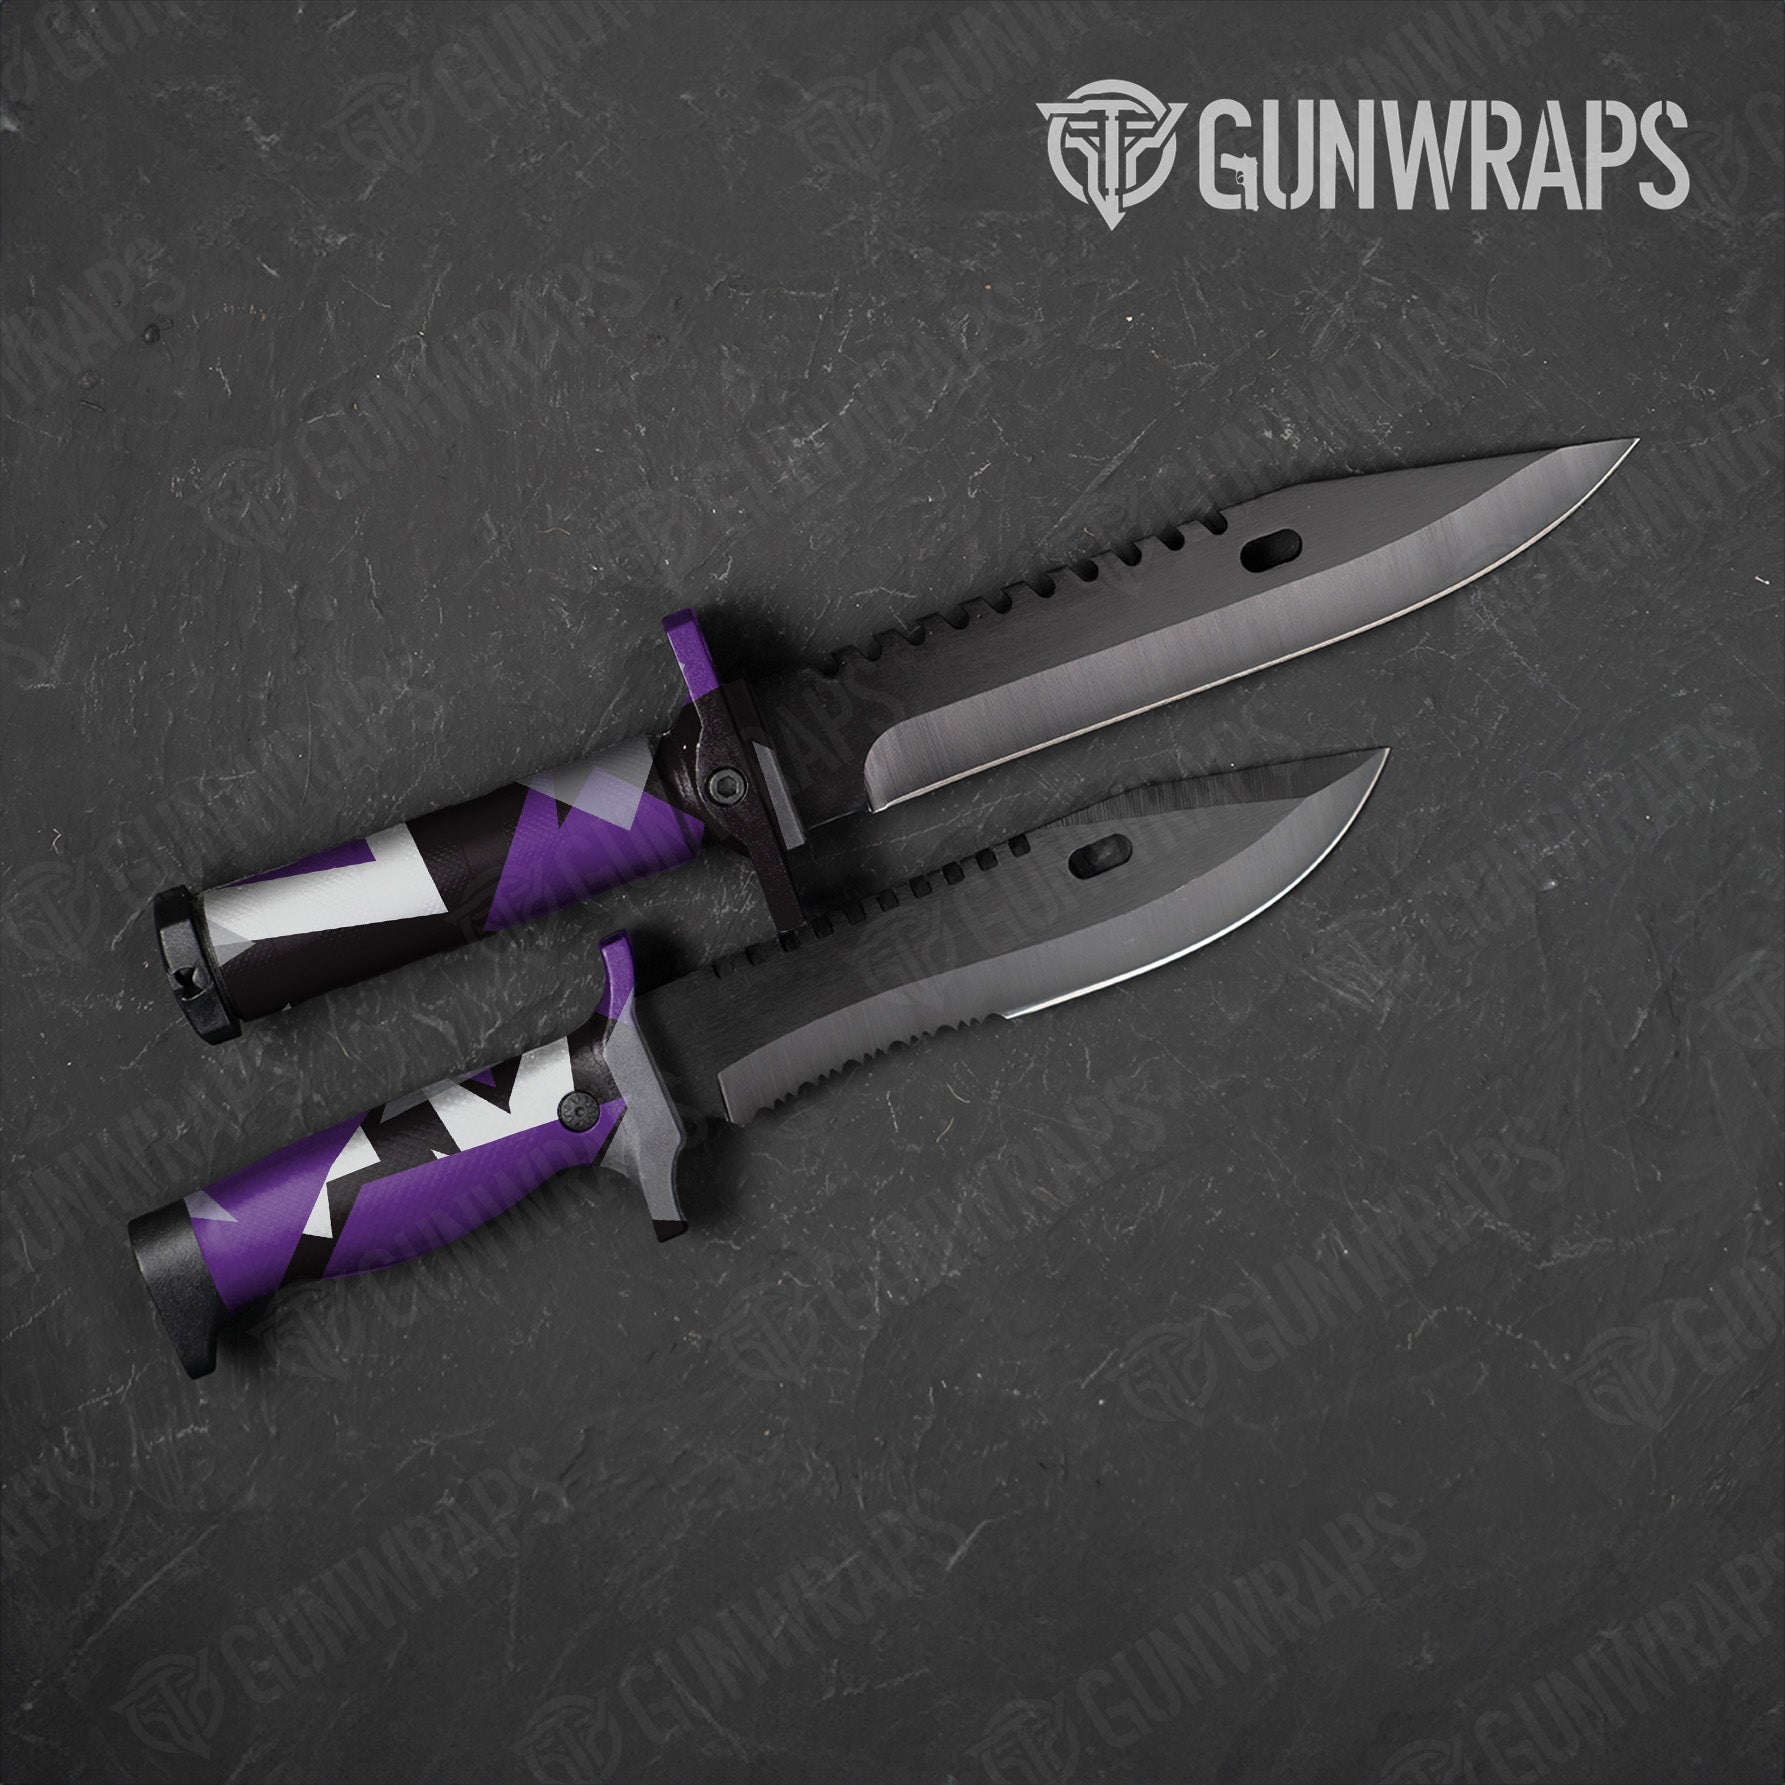 Shattered Purple Tiger Camo Knife Gear Skin Vinyl Wrap